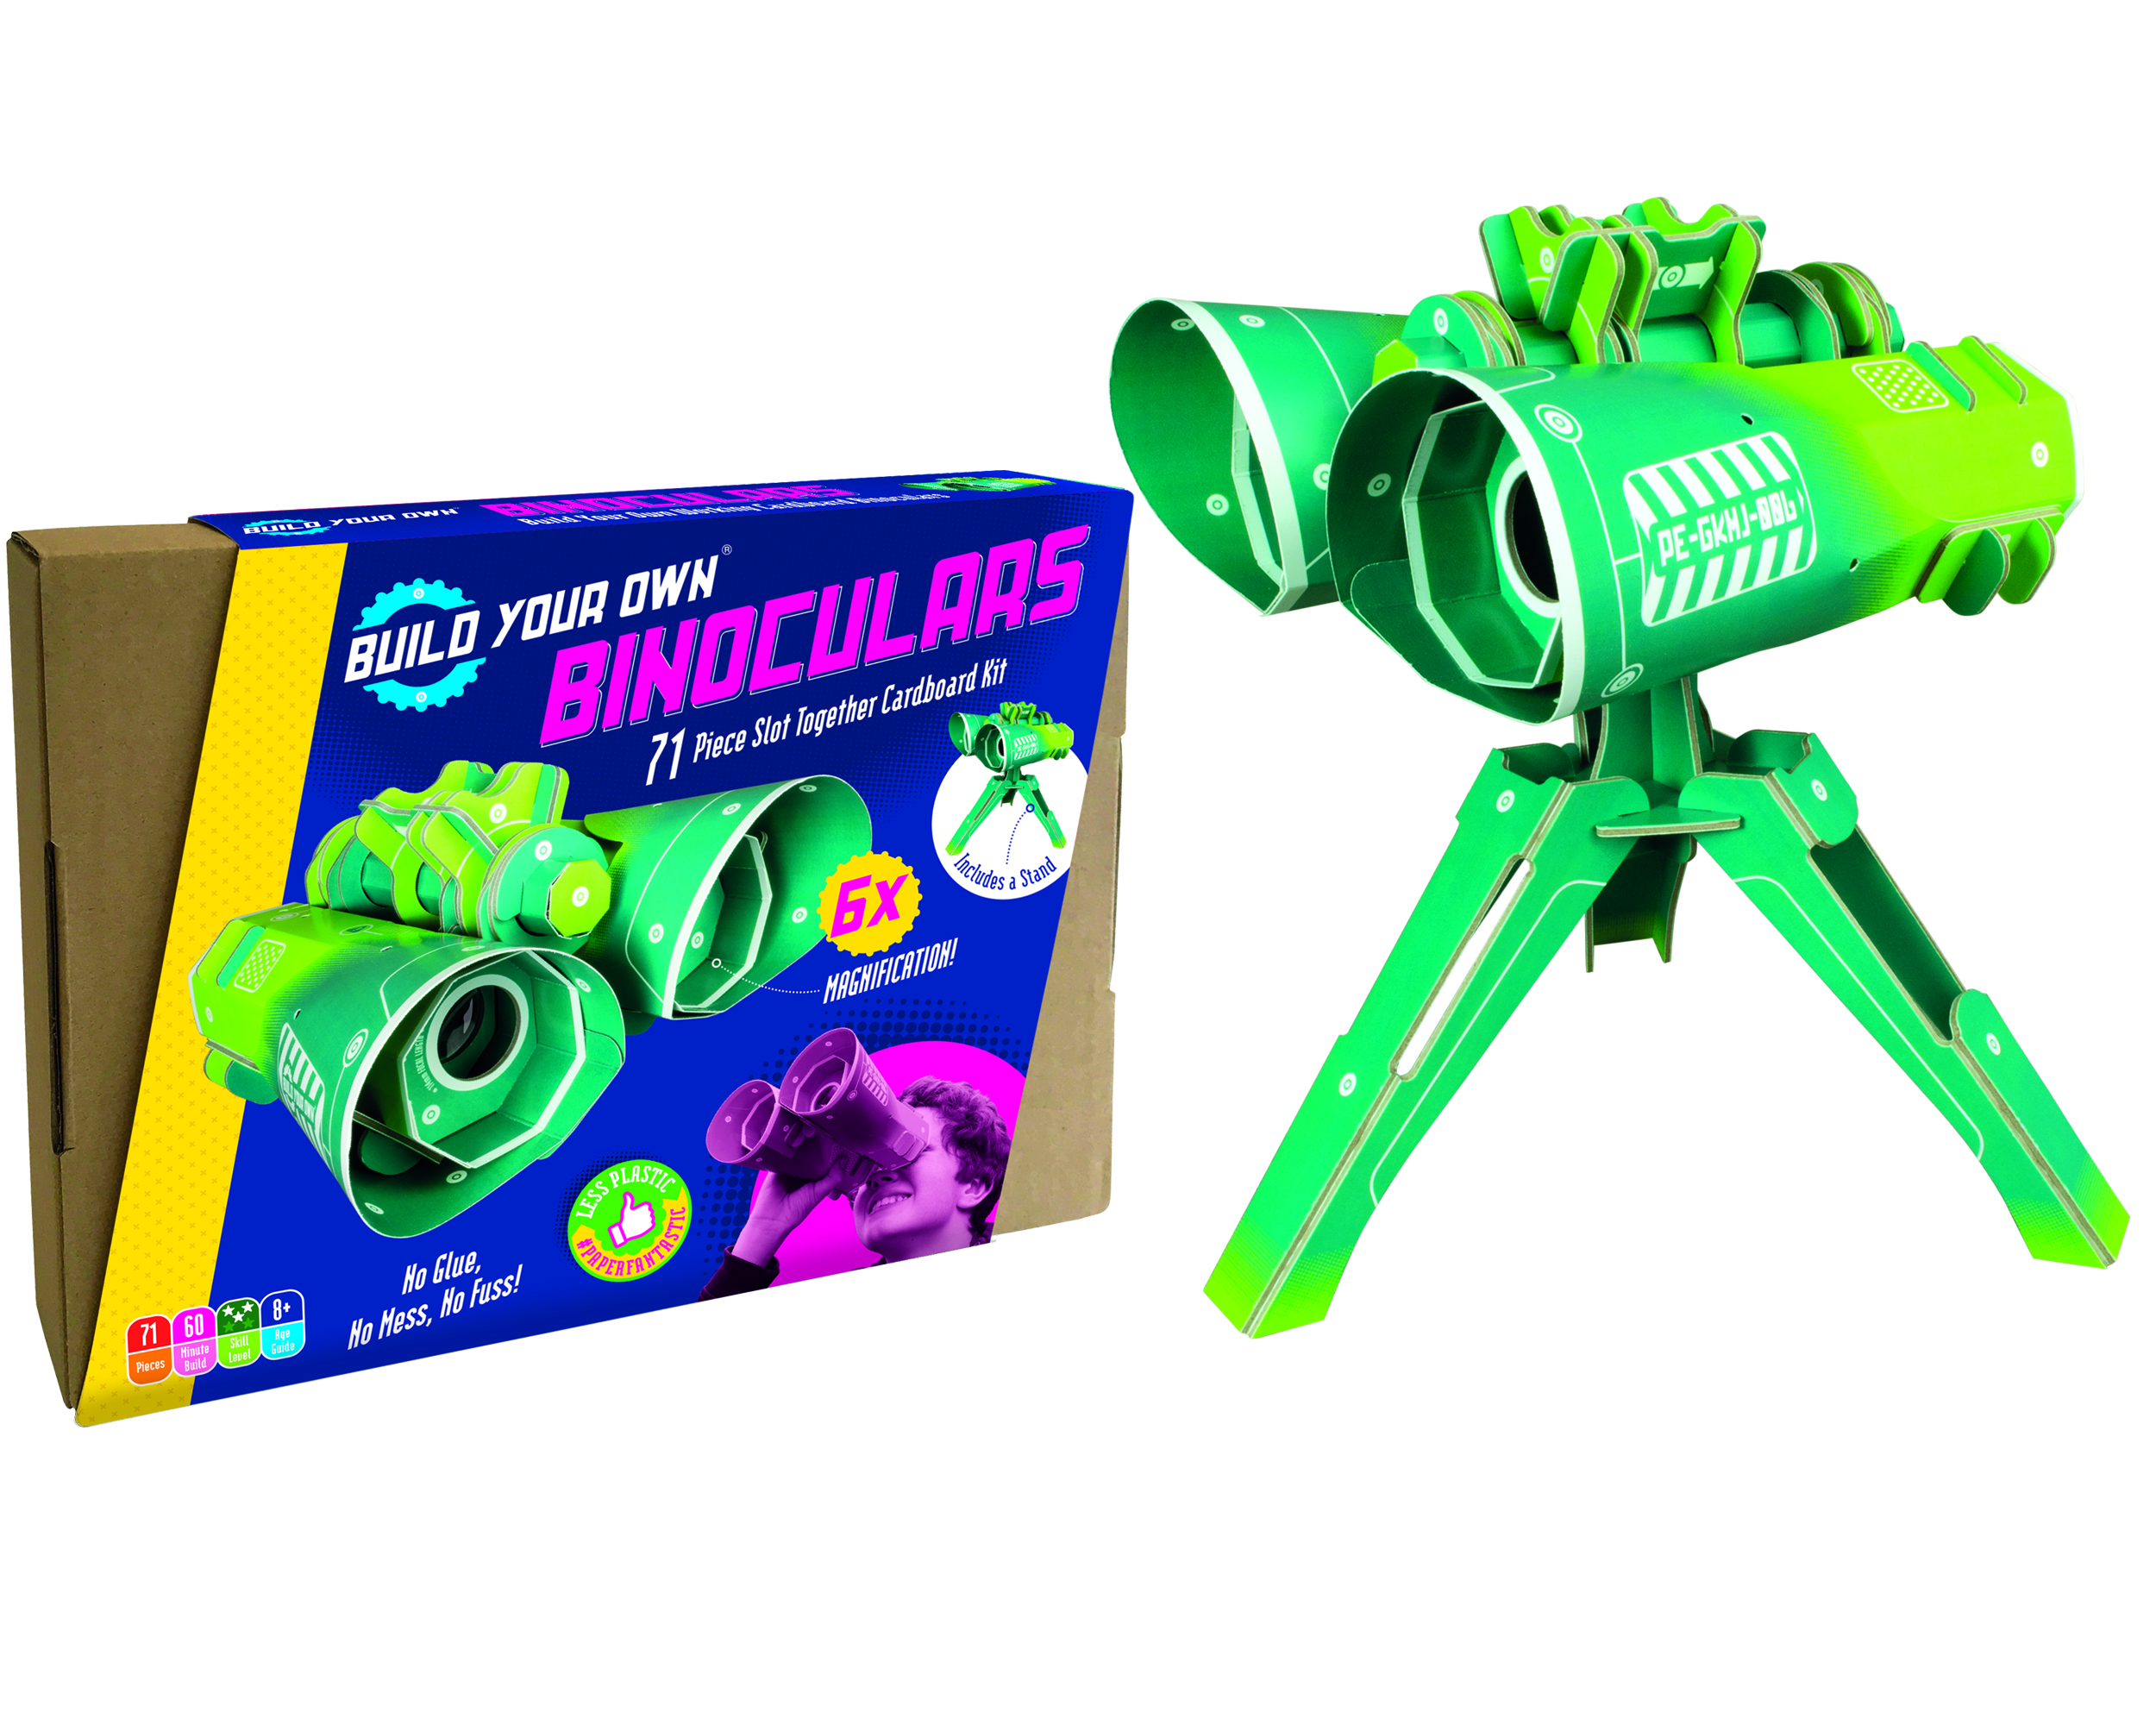 Build your Own Binoculars, worth £19.99